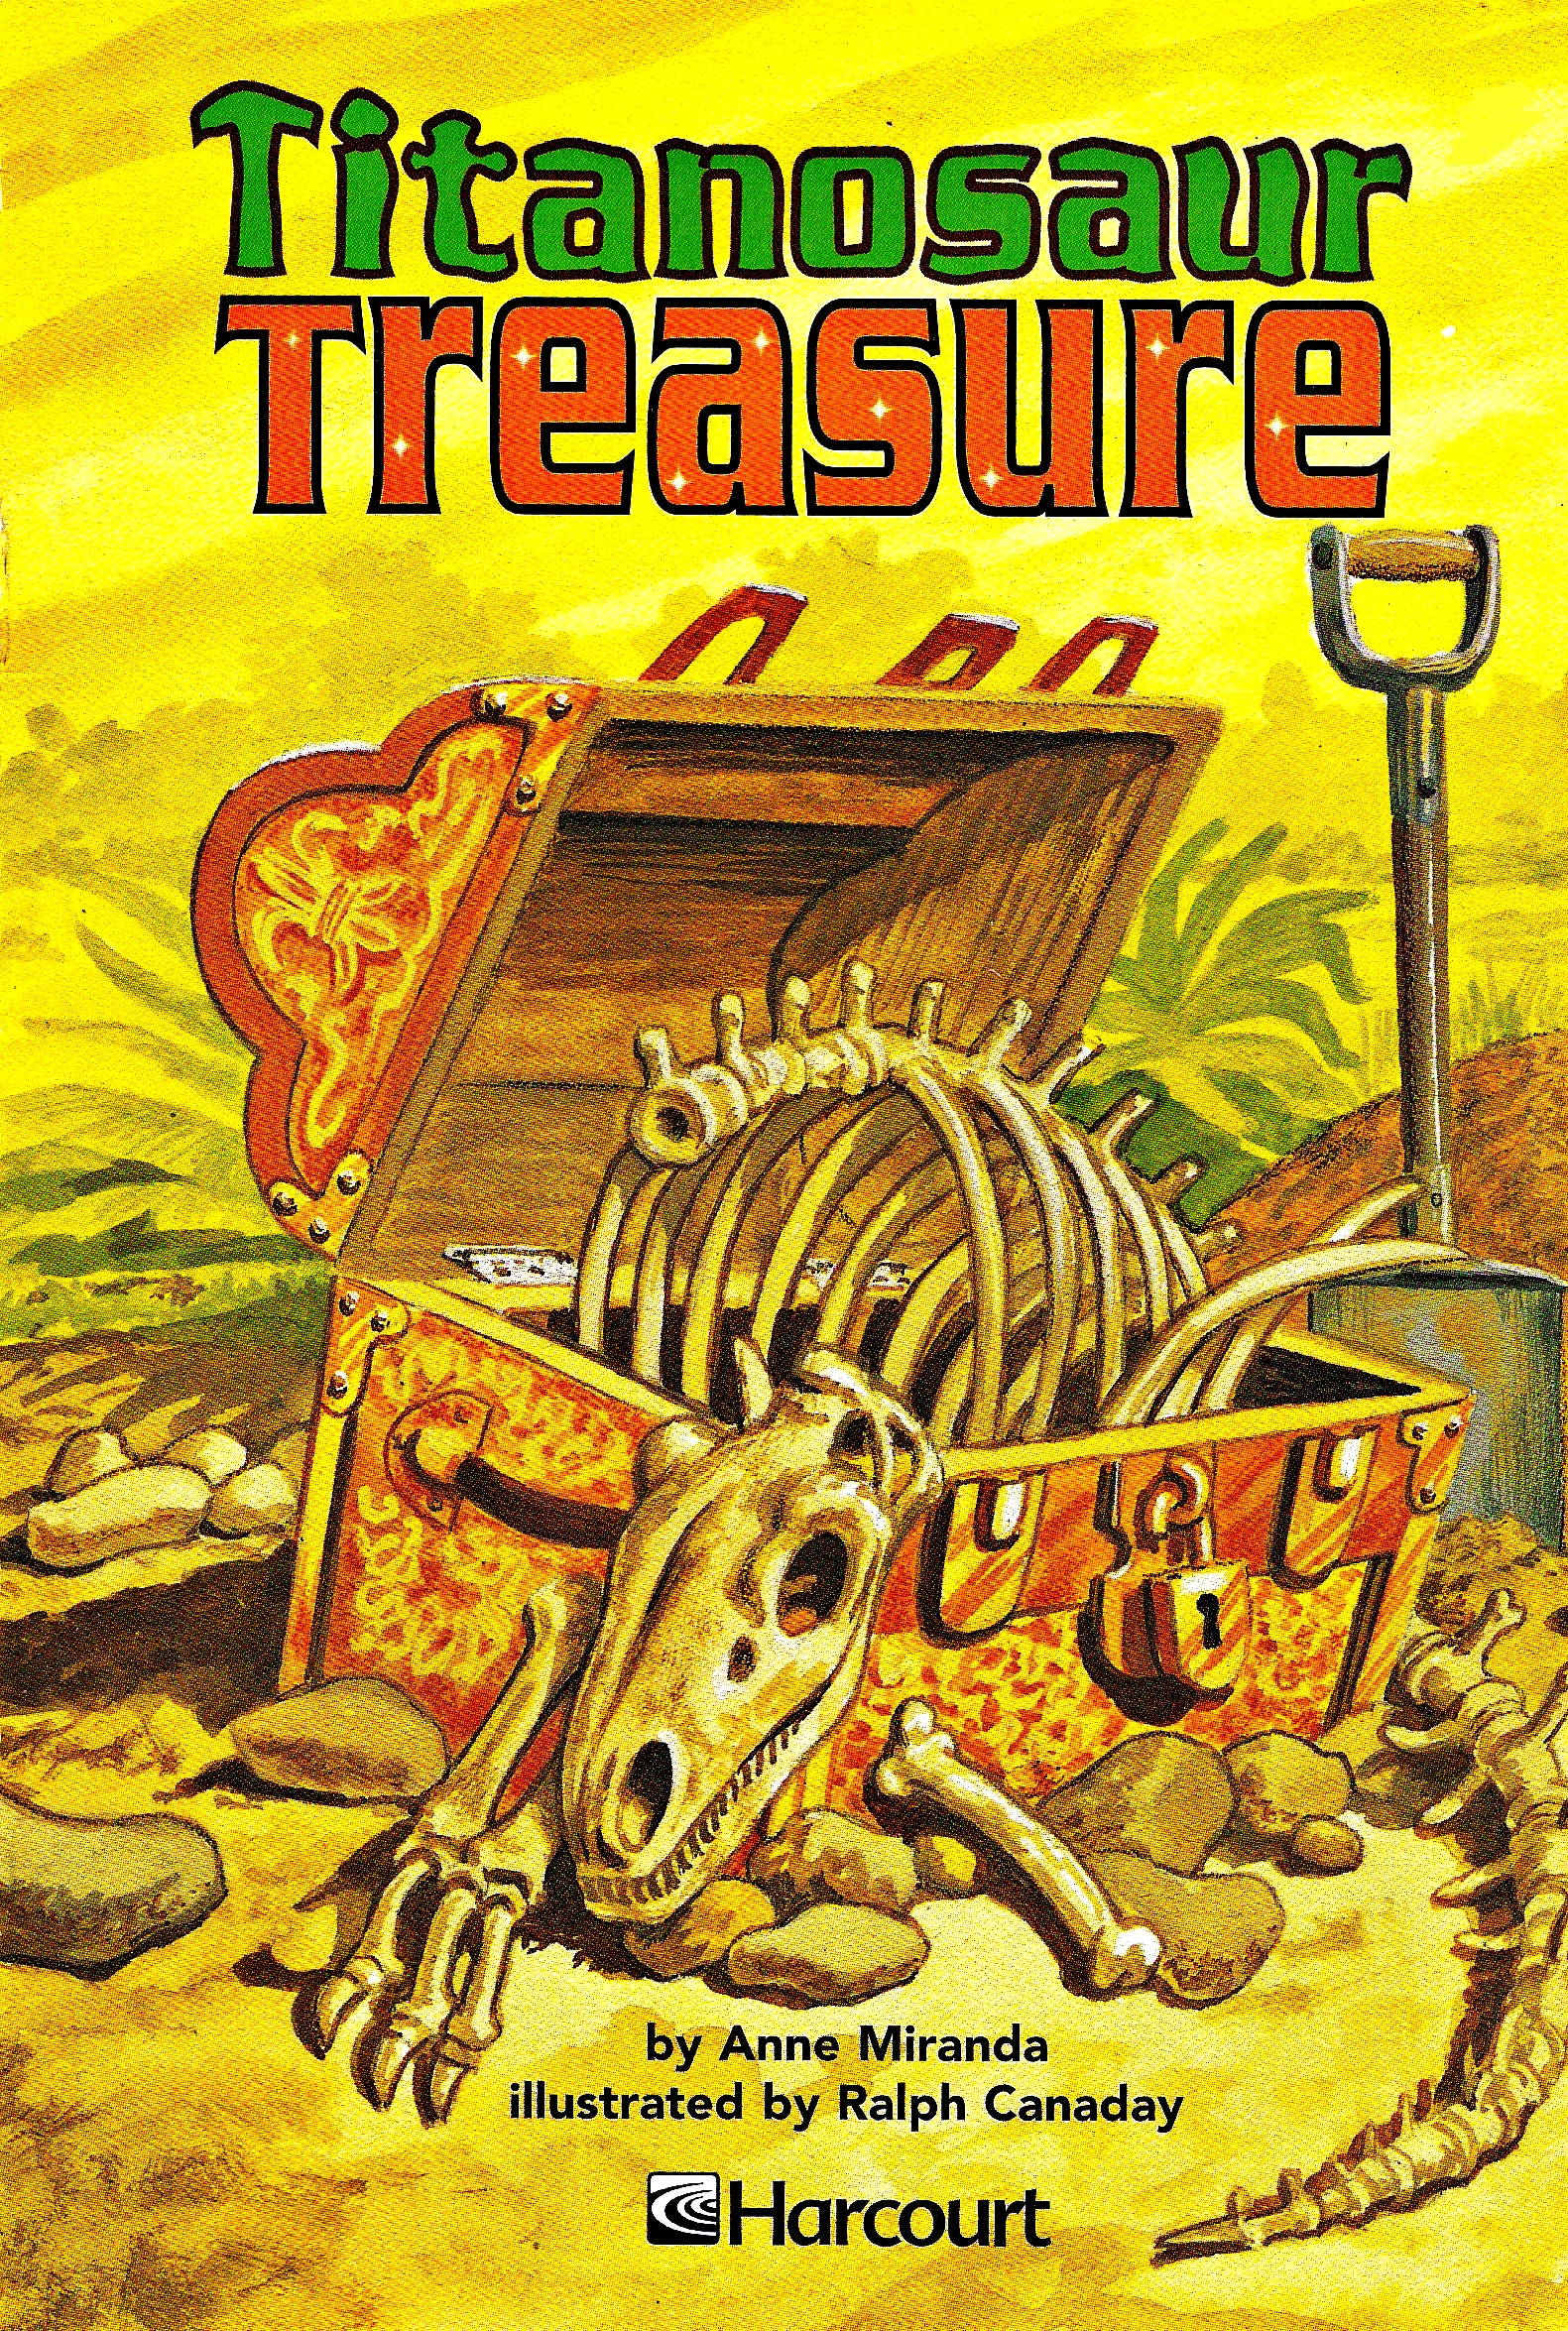 Titantosaur Treasure.jpg